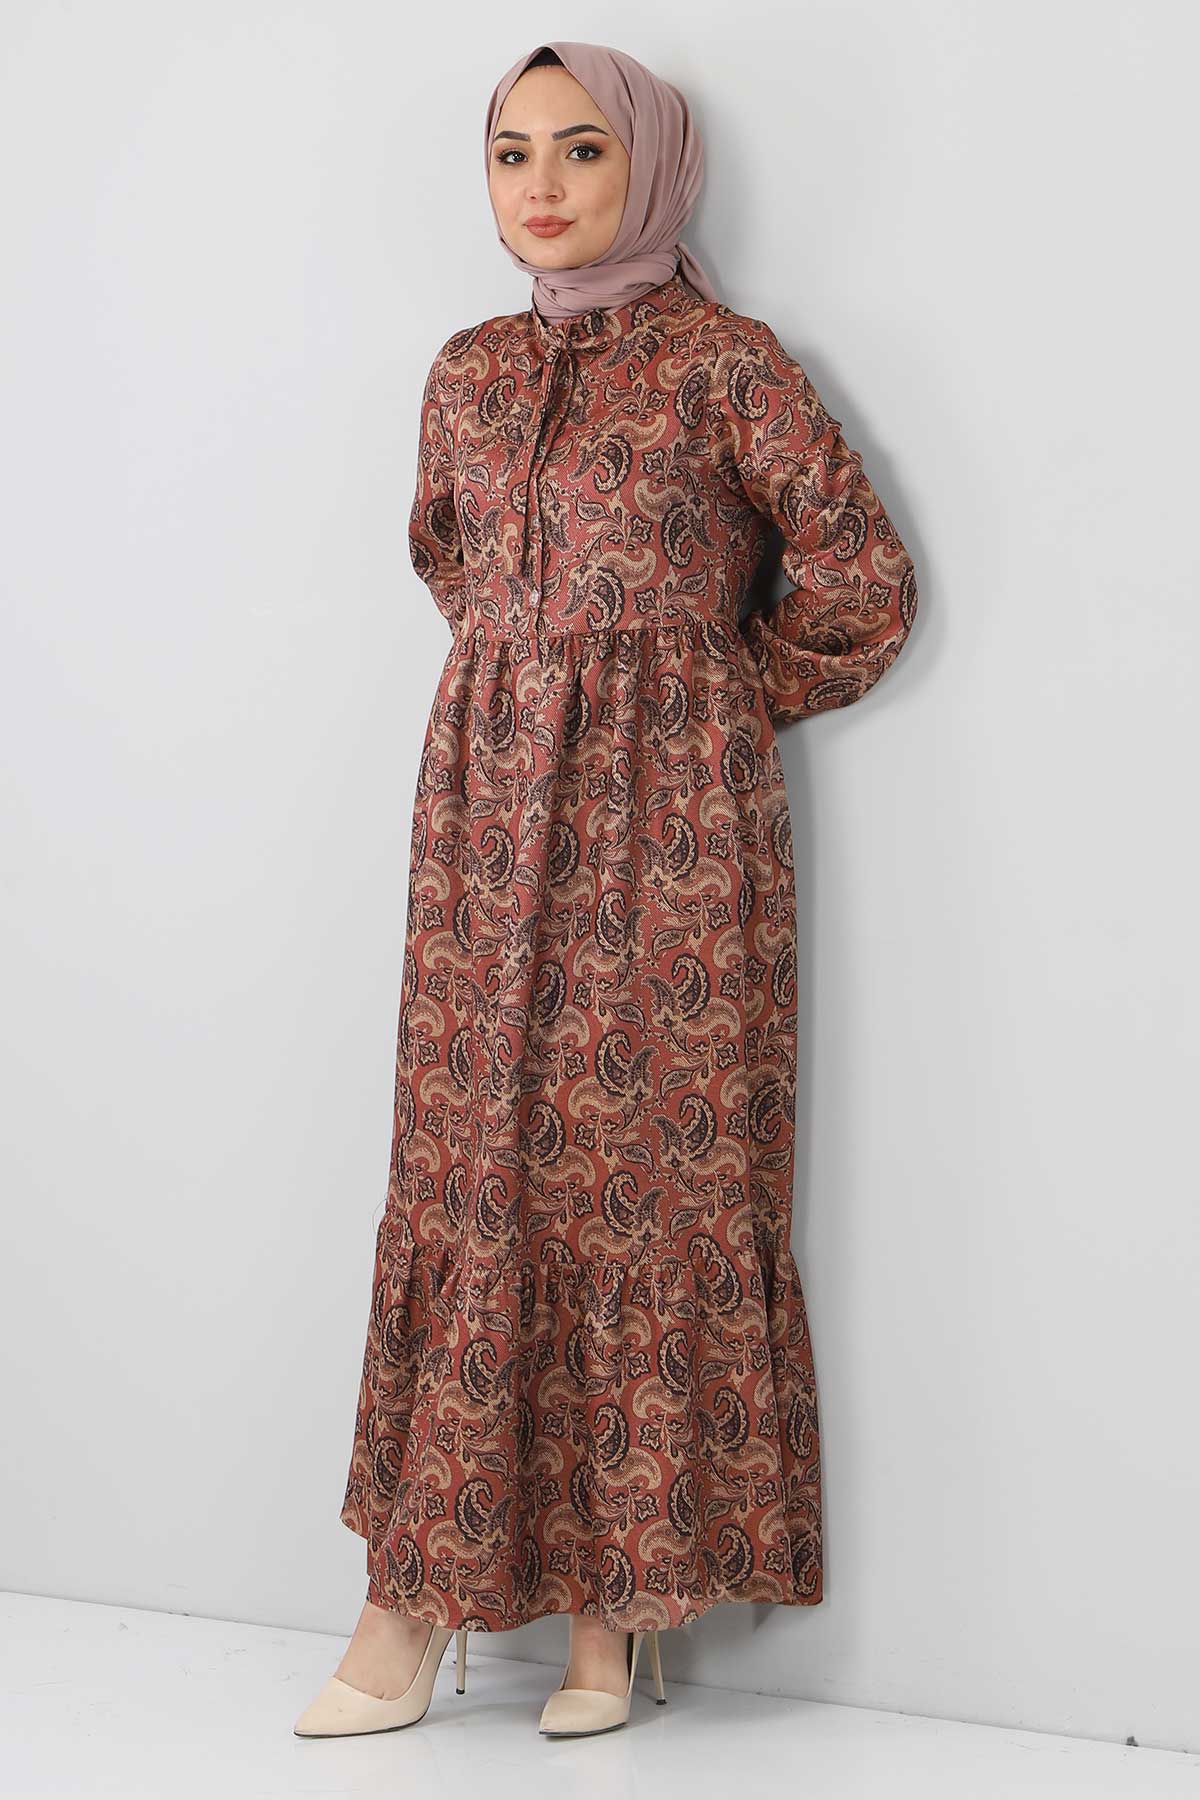 Tesettür Dünyası - Shawl Patterned Dress TSD4418 Brown